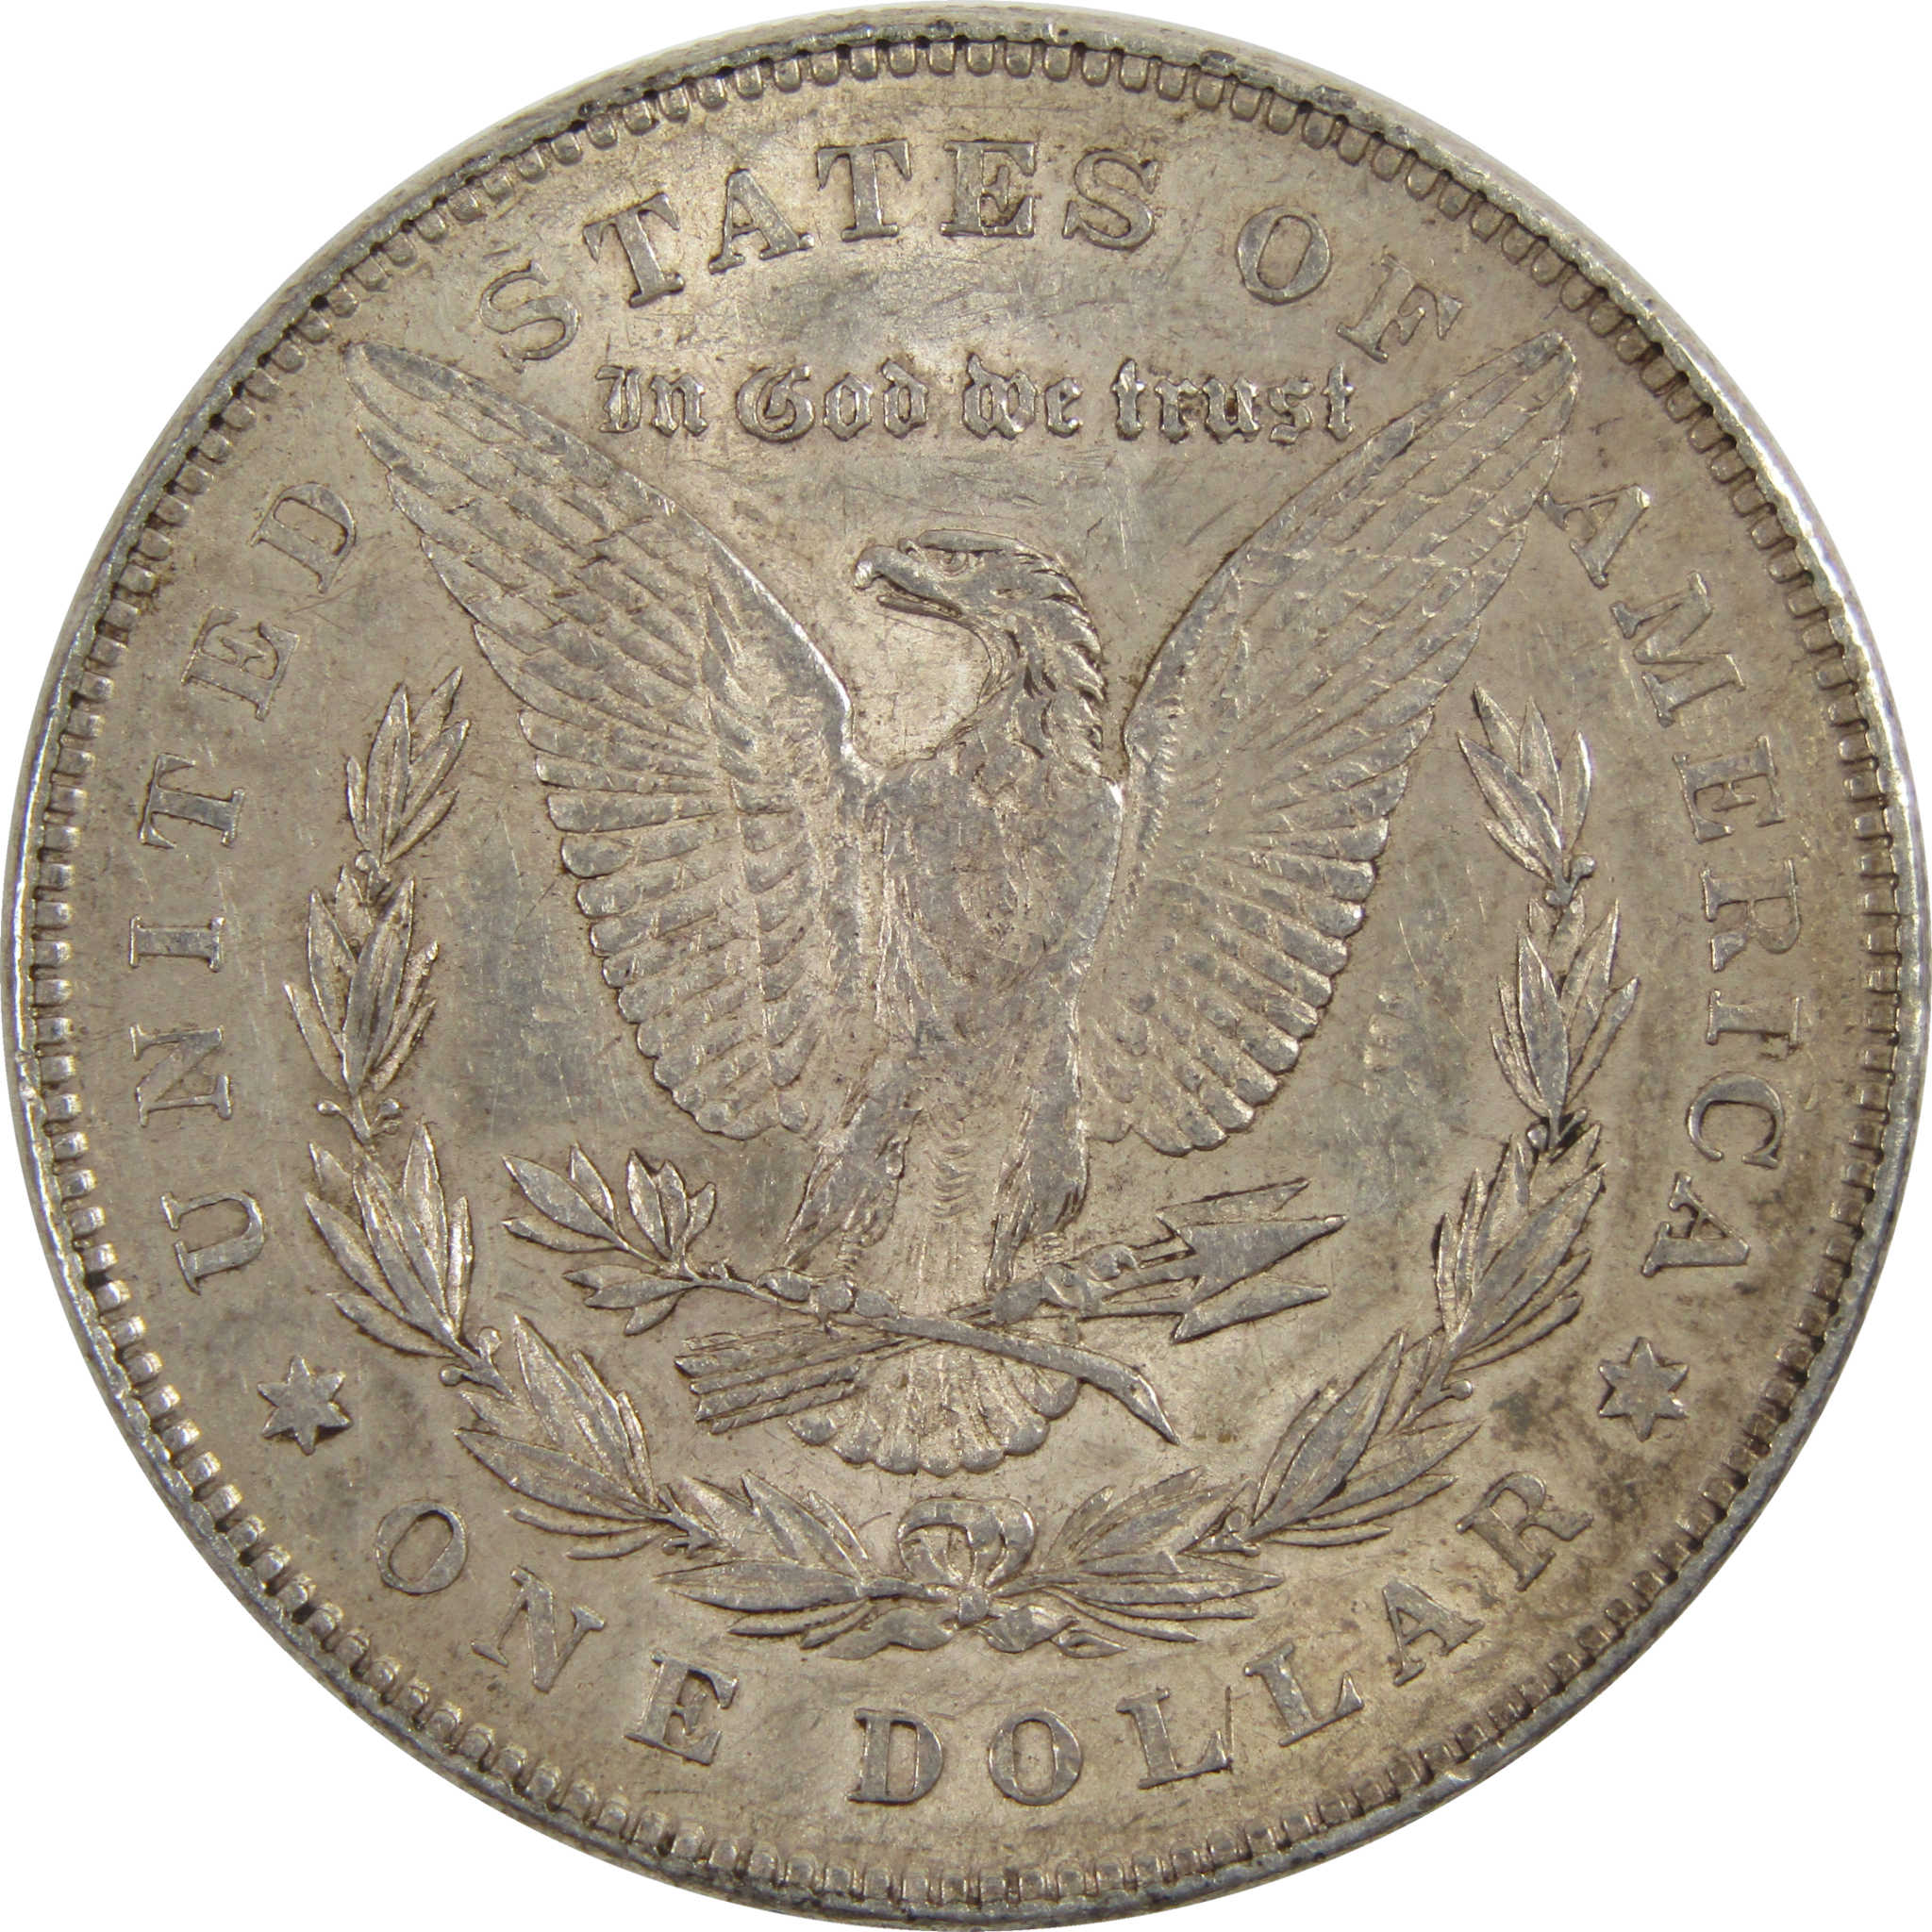 1878 7TF Rev 78 Morgan Dollar AU About Uncirculated 90% Silver $1 Coin SKU:I8139 - Morgan coin - Morgan silver dollar - Morgan silver dollar for sale - Profile Coins &amp; Collectibles